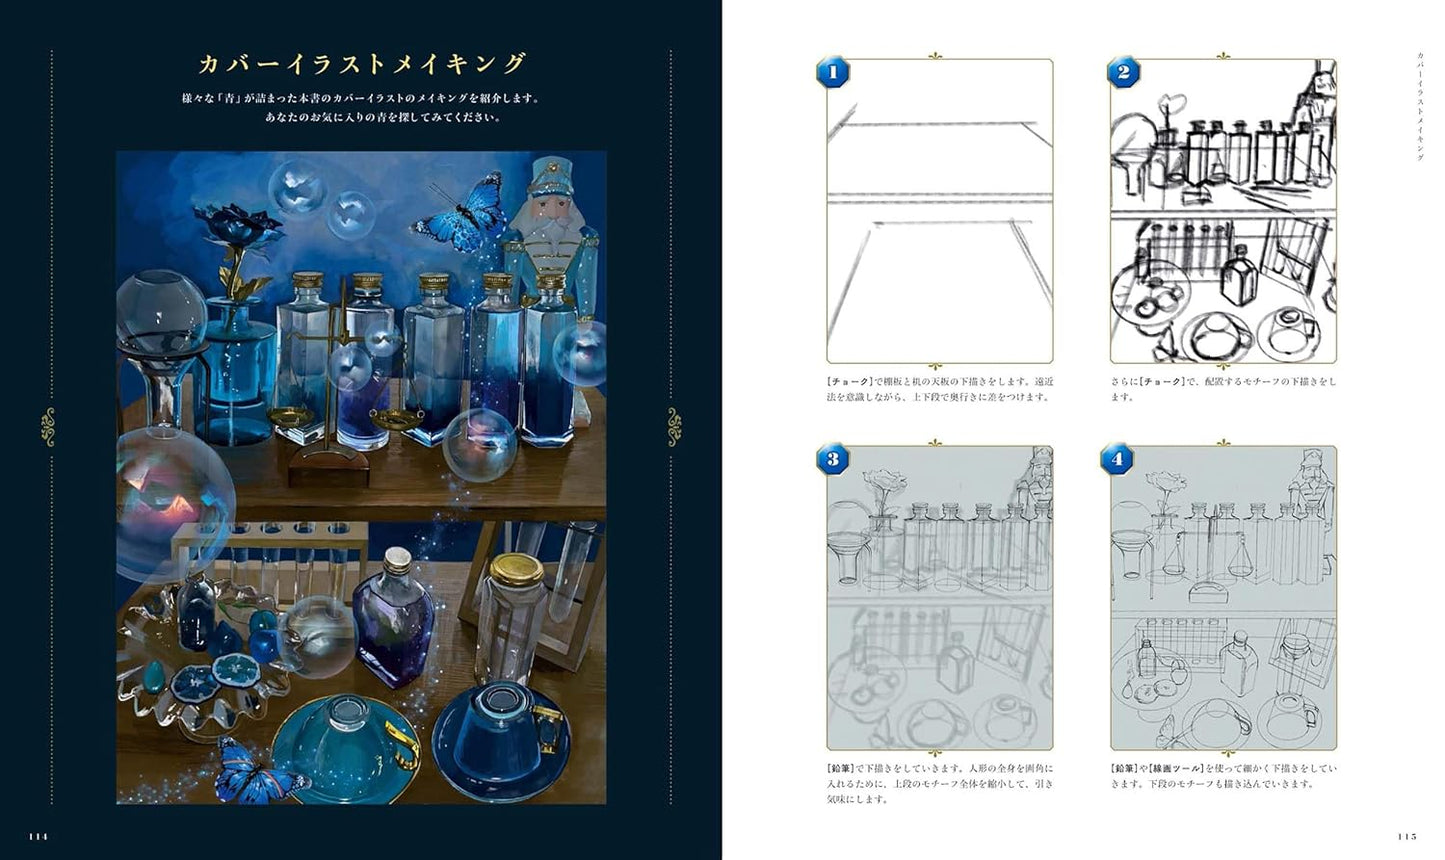 Yas Illustration Making Book "Blue Night Variety Store"